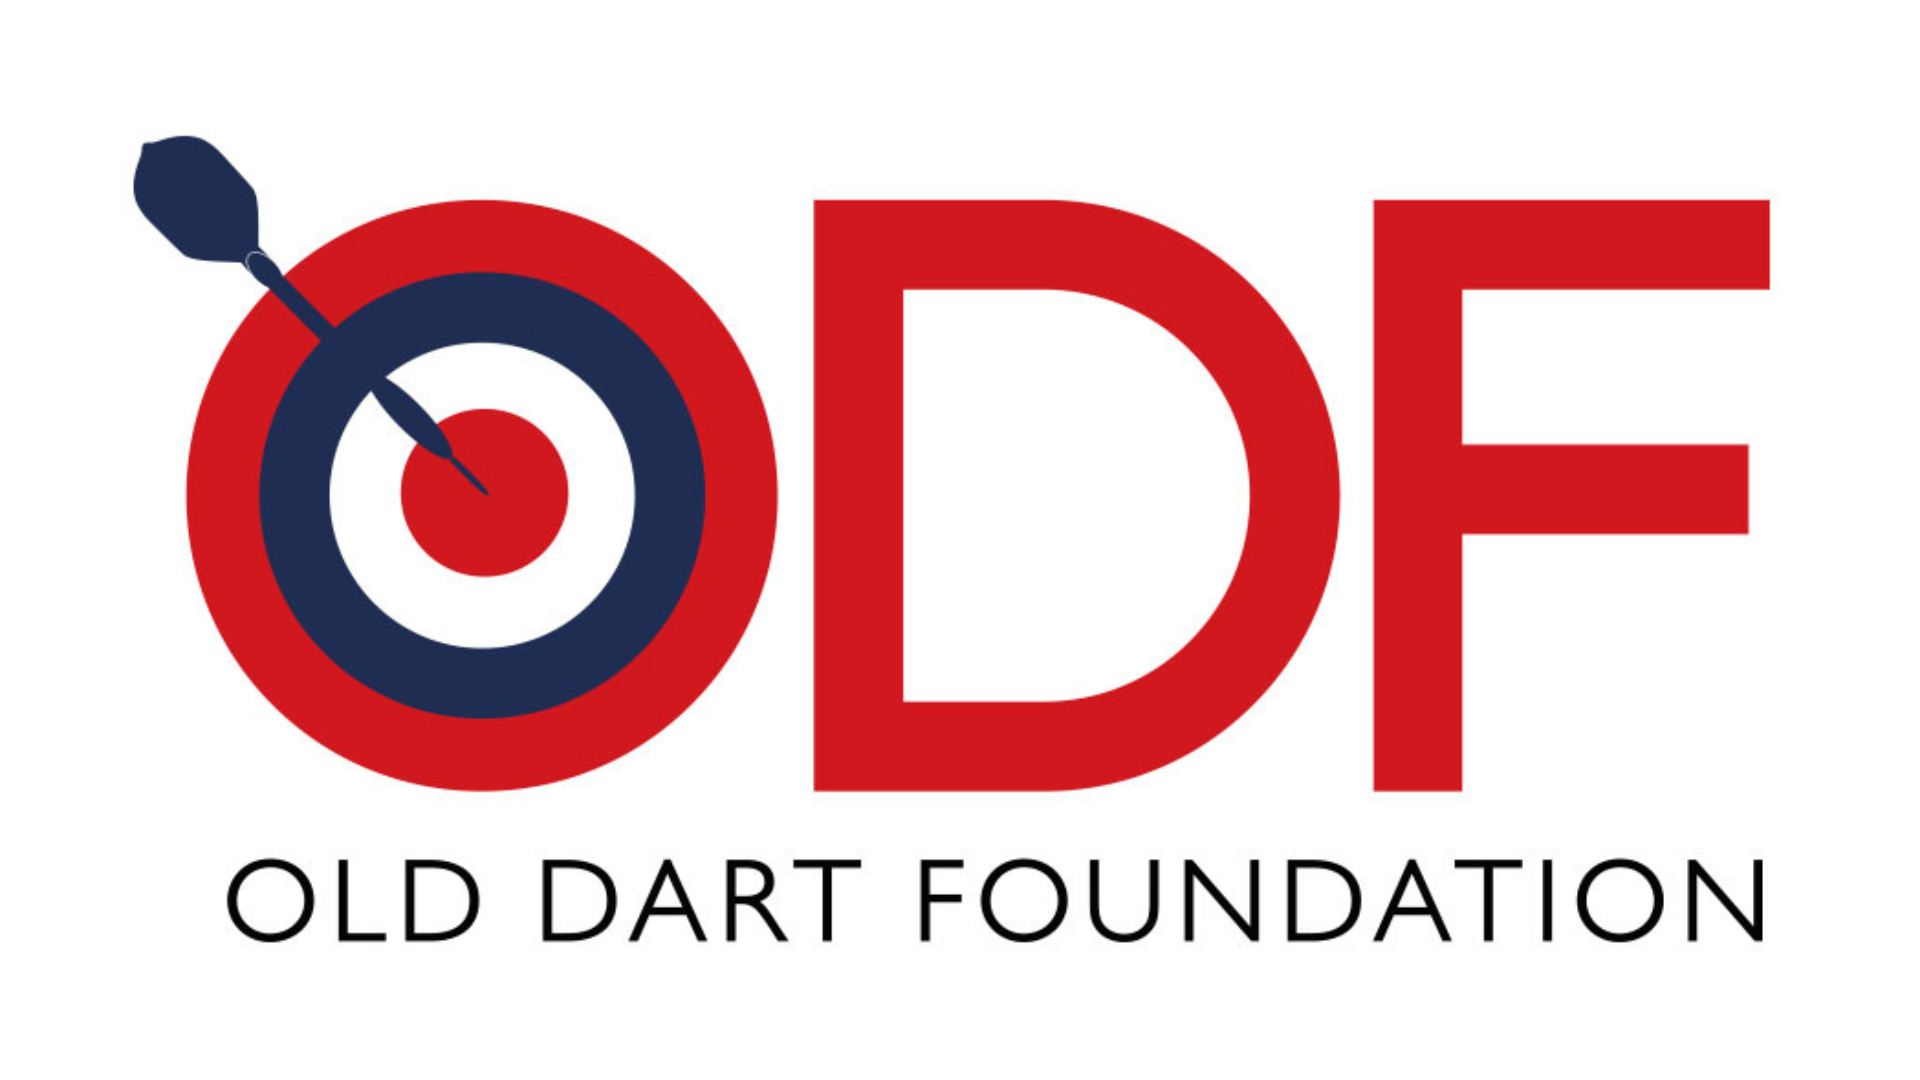 Old Dart Foundation logo